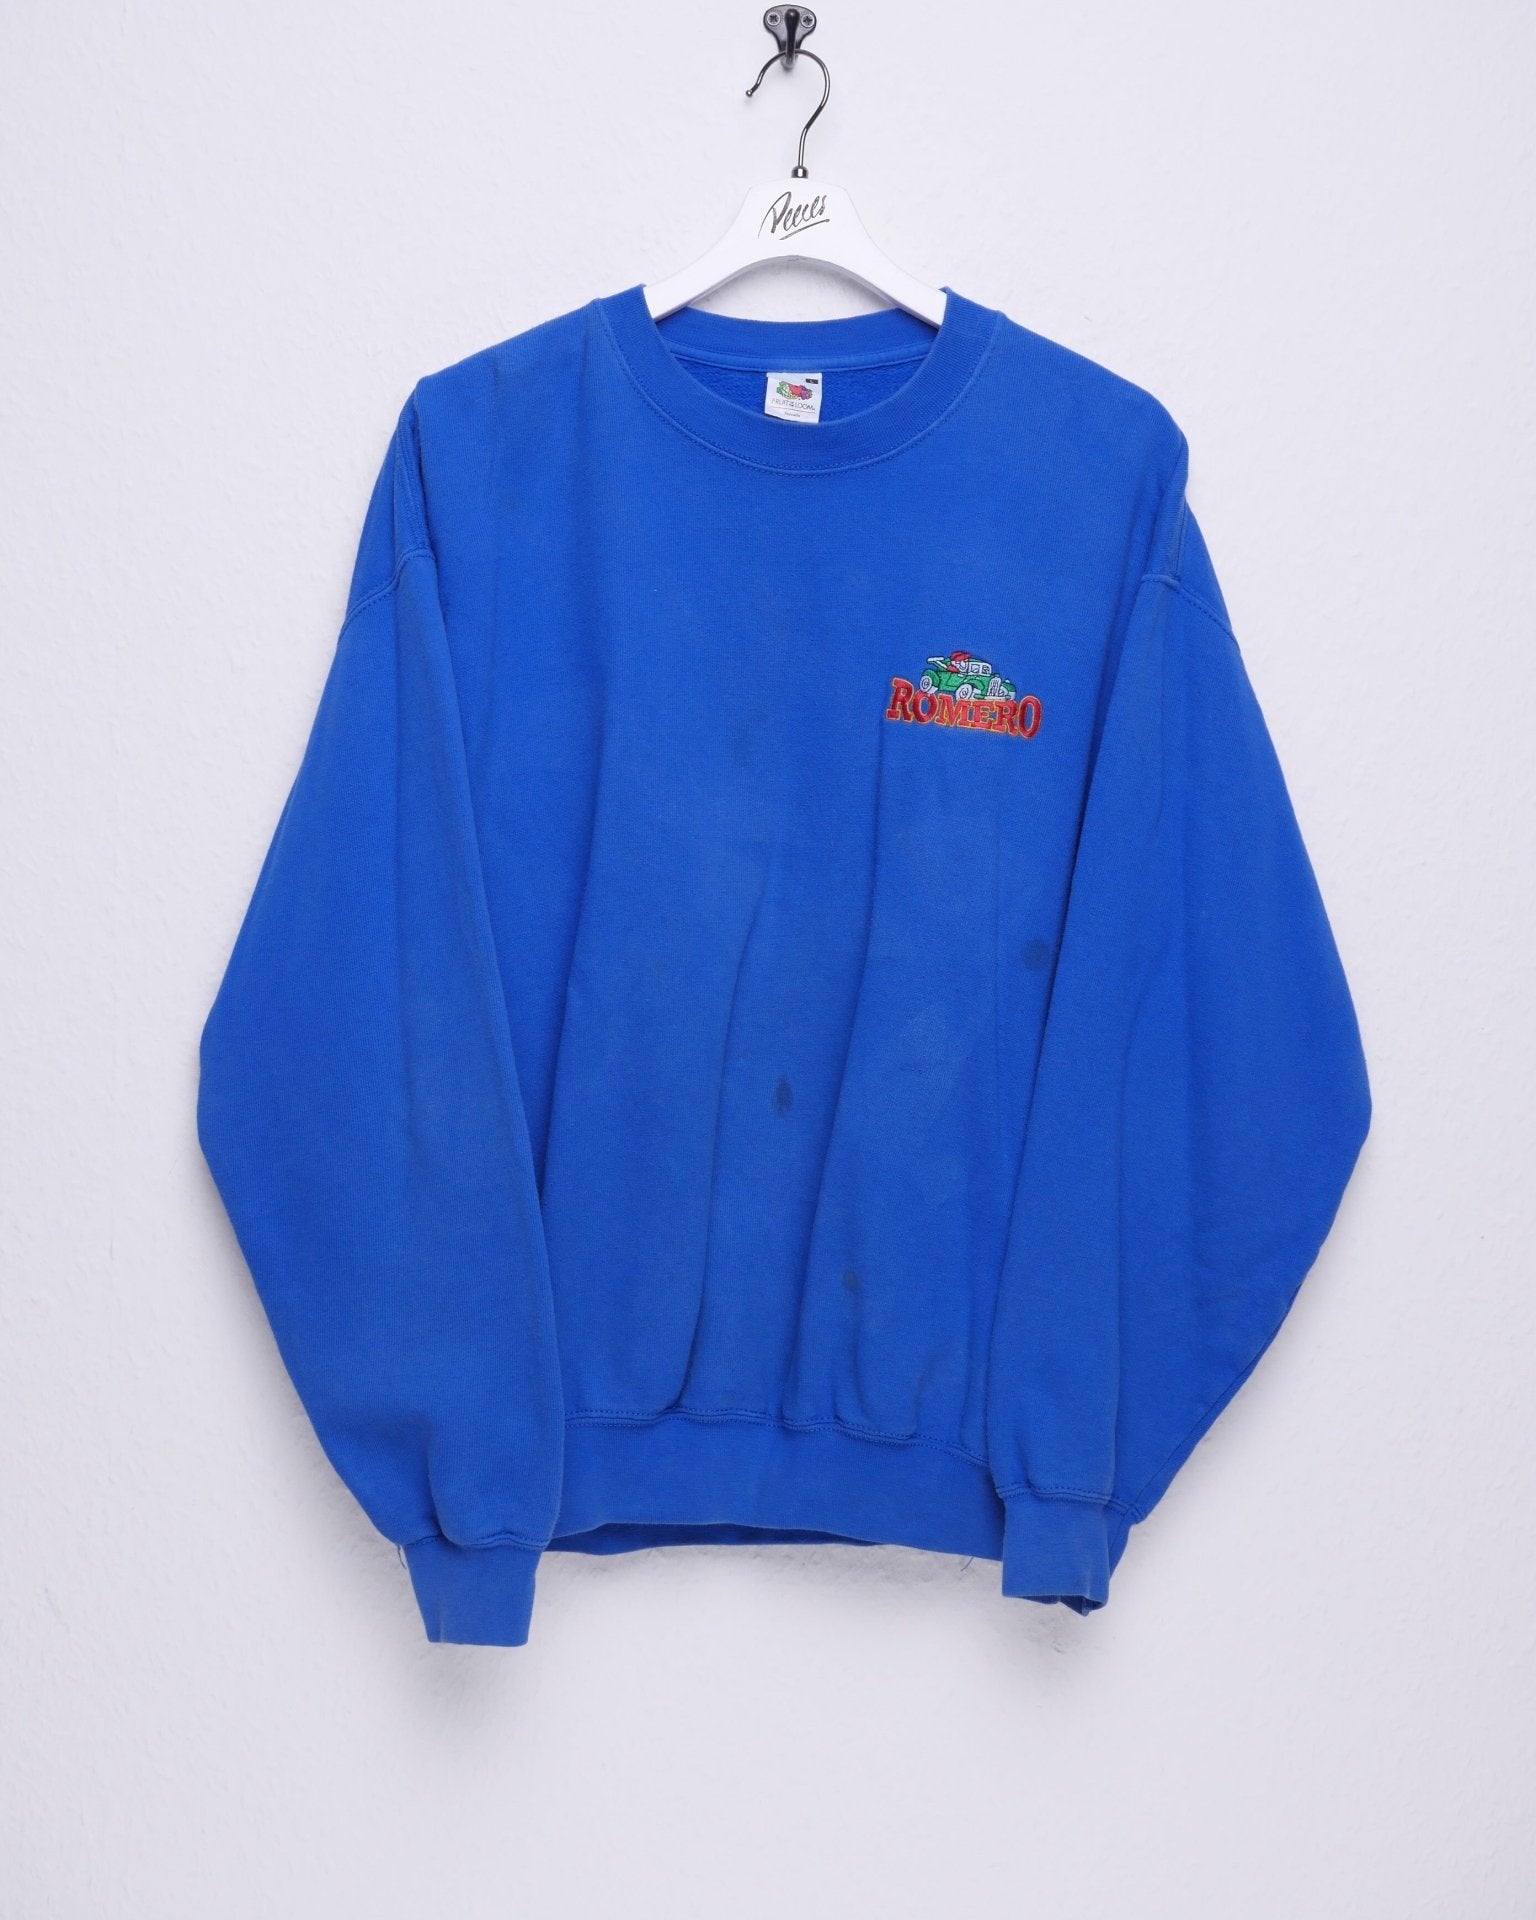 embroidered Romero blue Sweater - Peeces